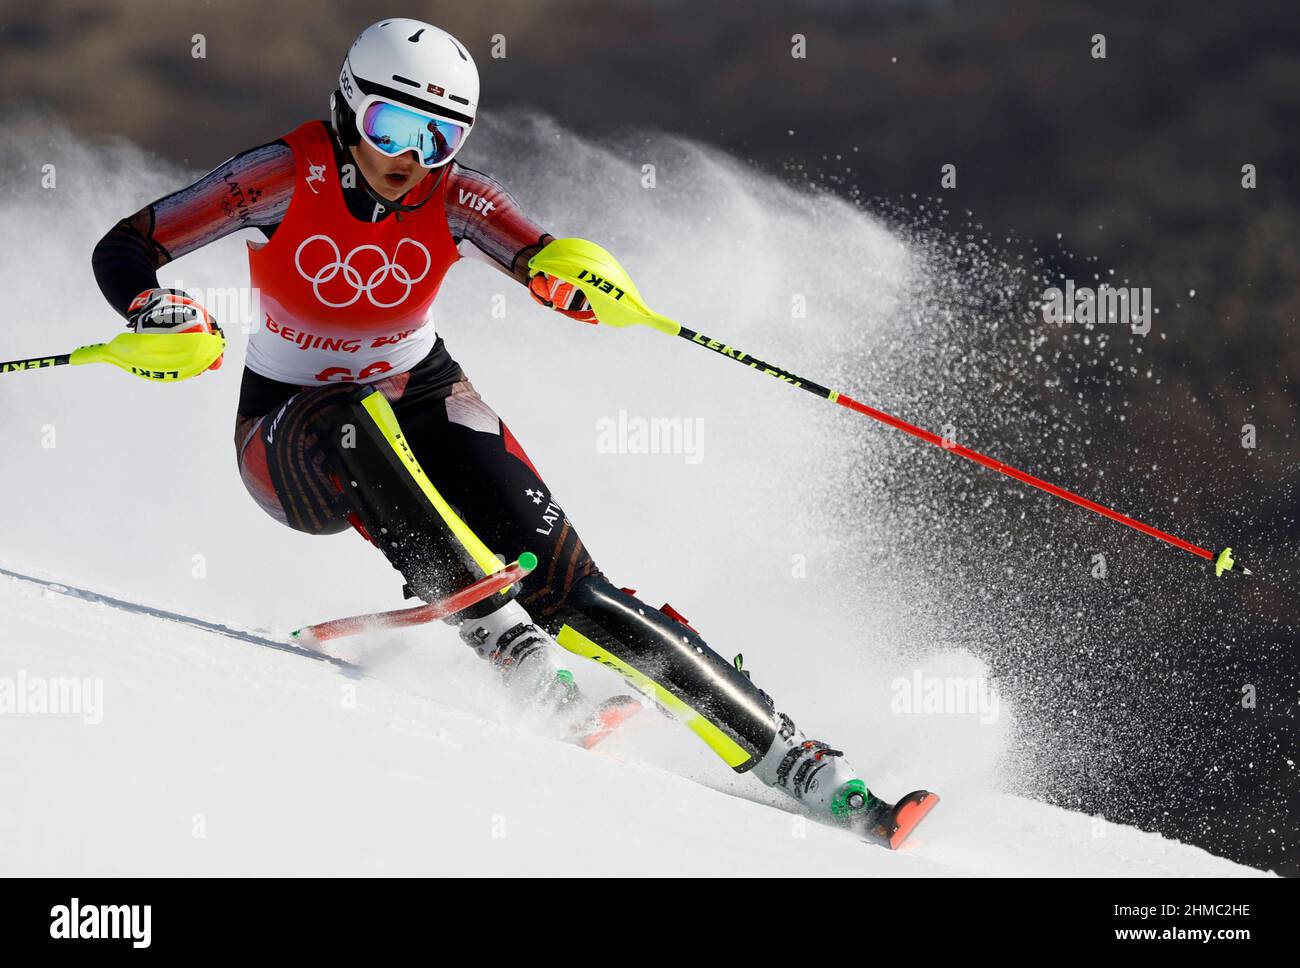 2022 Beijing Olympics - Alpine Skiing - Women's Slalom Run 1 - National  Alpine Skiing Centre, Yanqing district, Beijing, China - February 9, 2022.  Liene Bondare of Latvia in action. REUTERS/Christian Hartmann Stock Photo -  Alamy